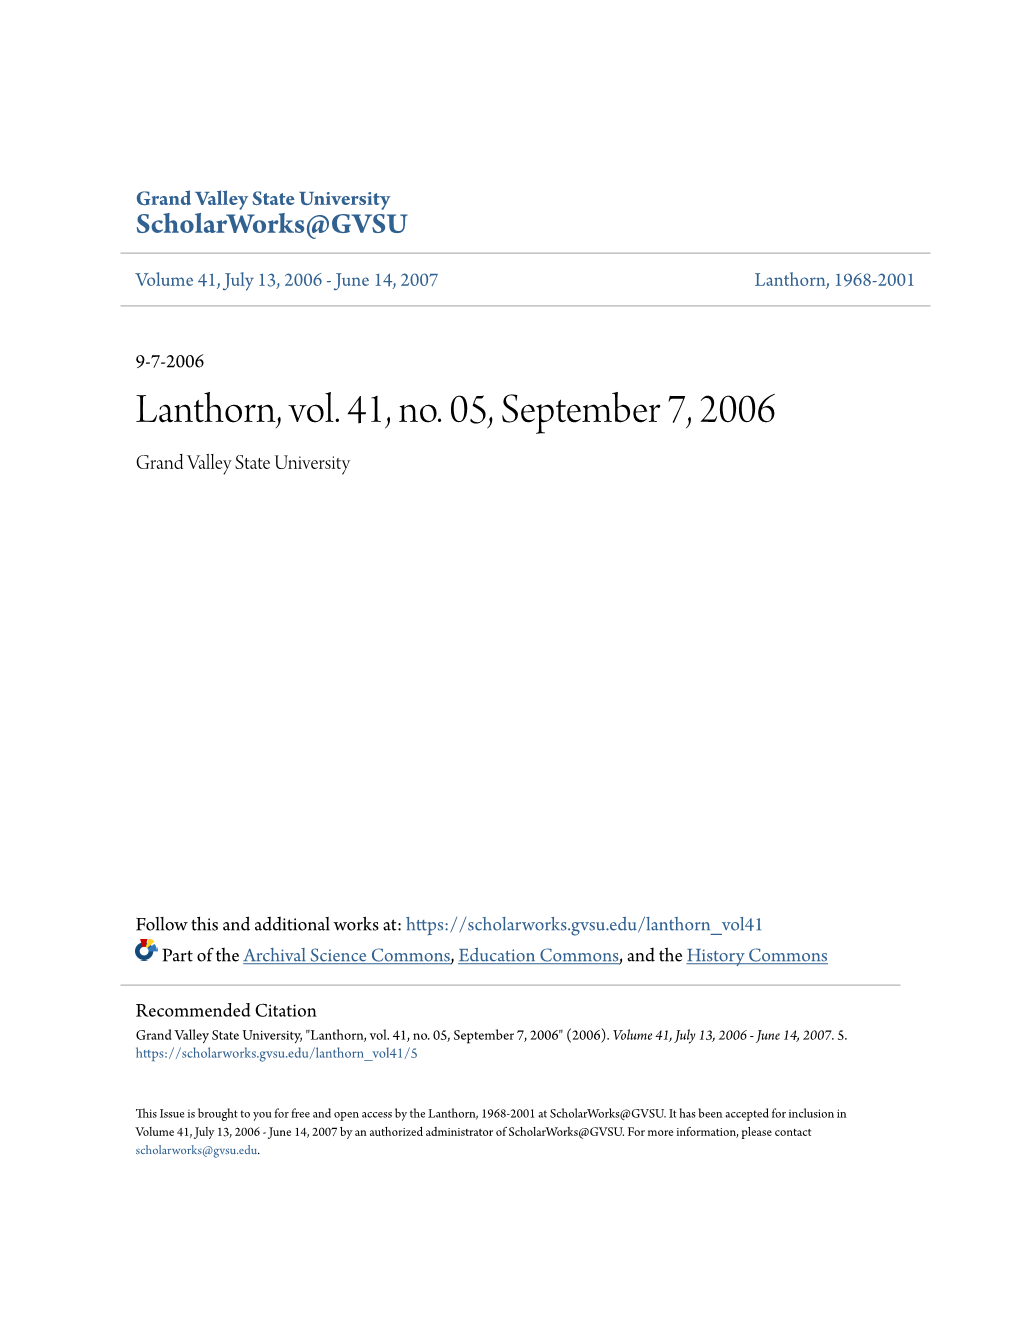 Lanthorn, Vol. 41, No. 05, September 7, 2006 Grand Valley State University